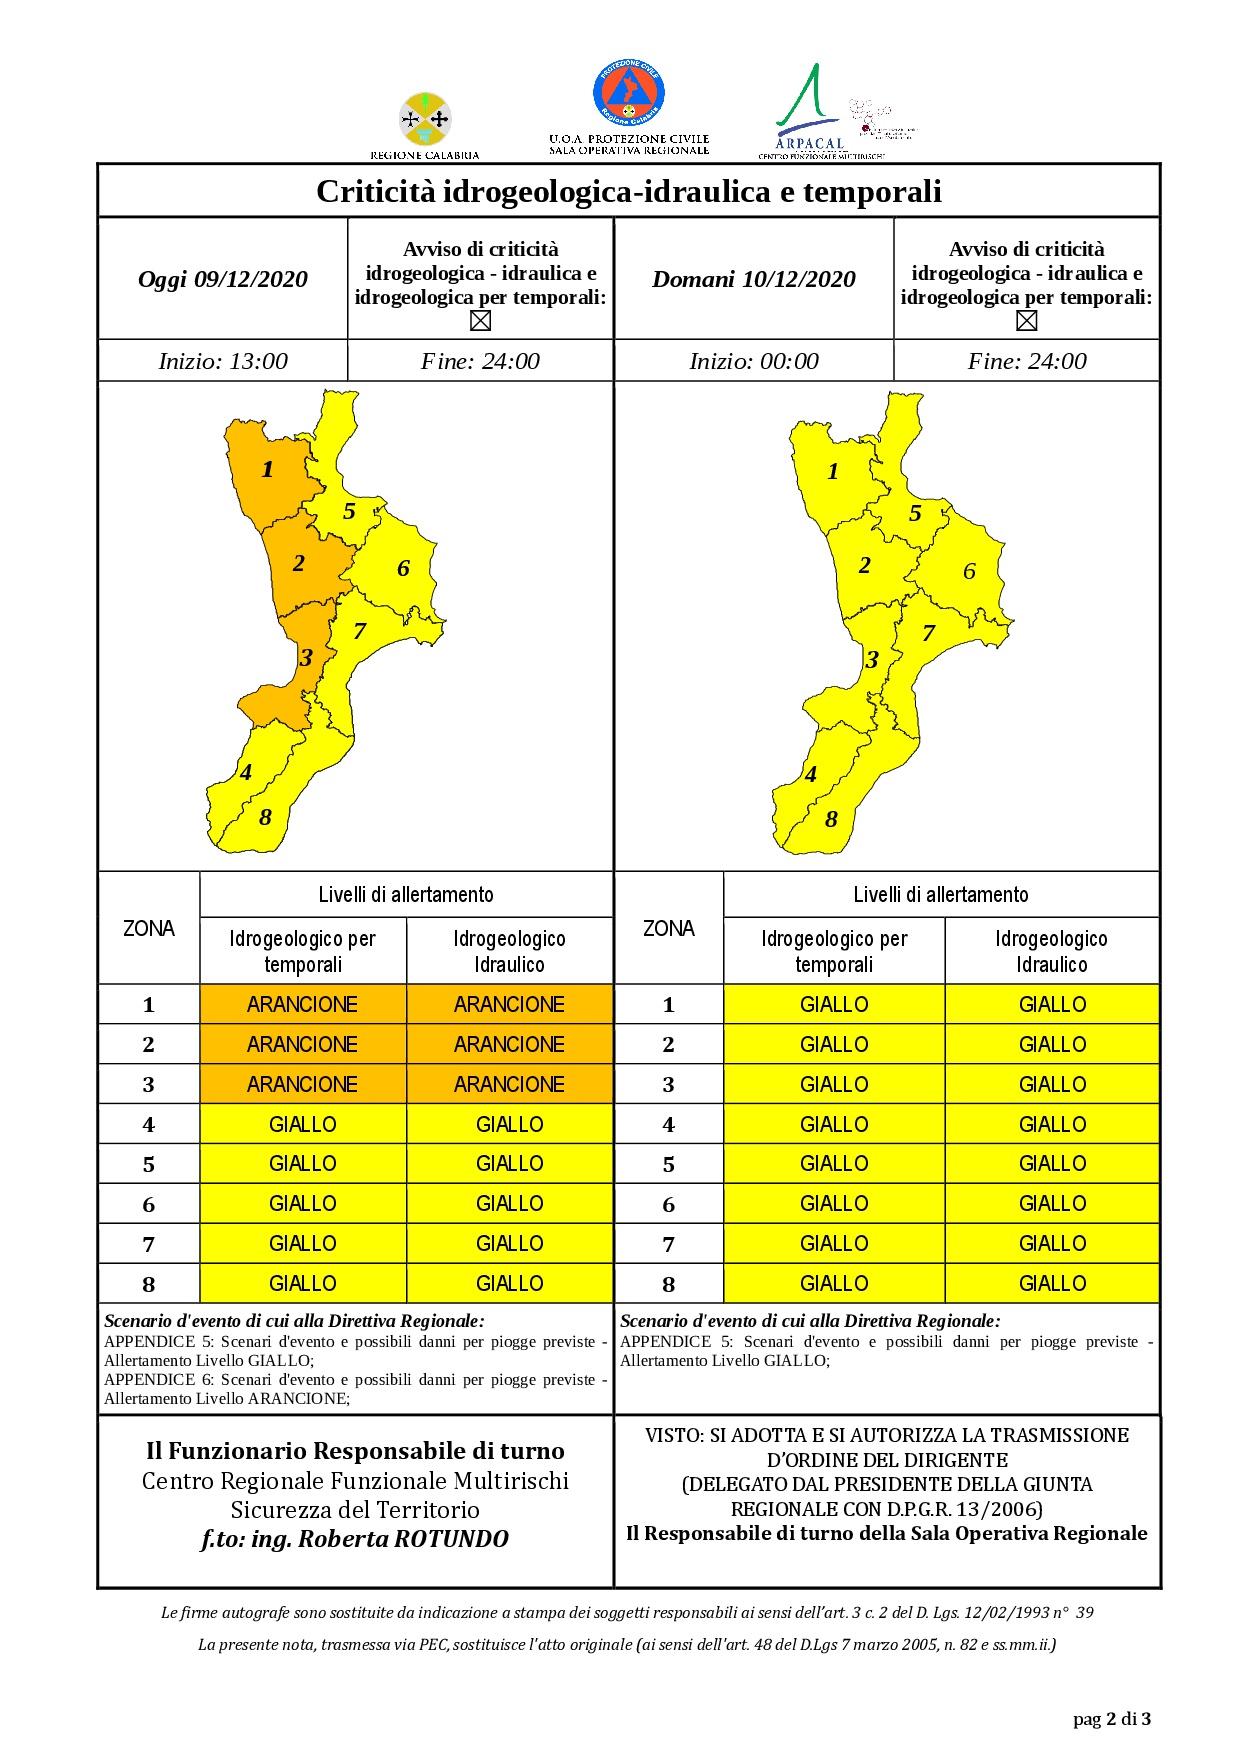 Criticità idrogeologica-idraulica e temporali in Calabria 09-12-2020